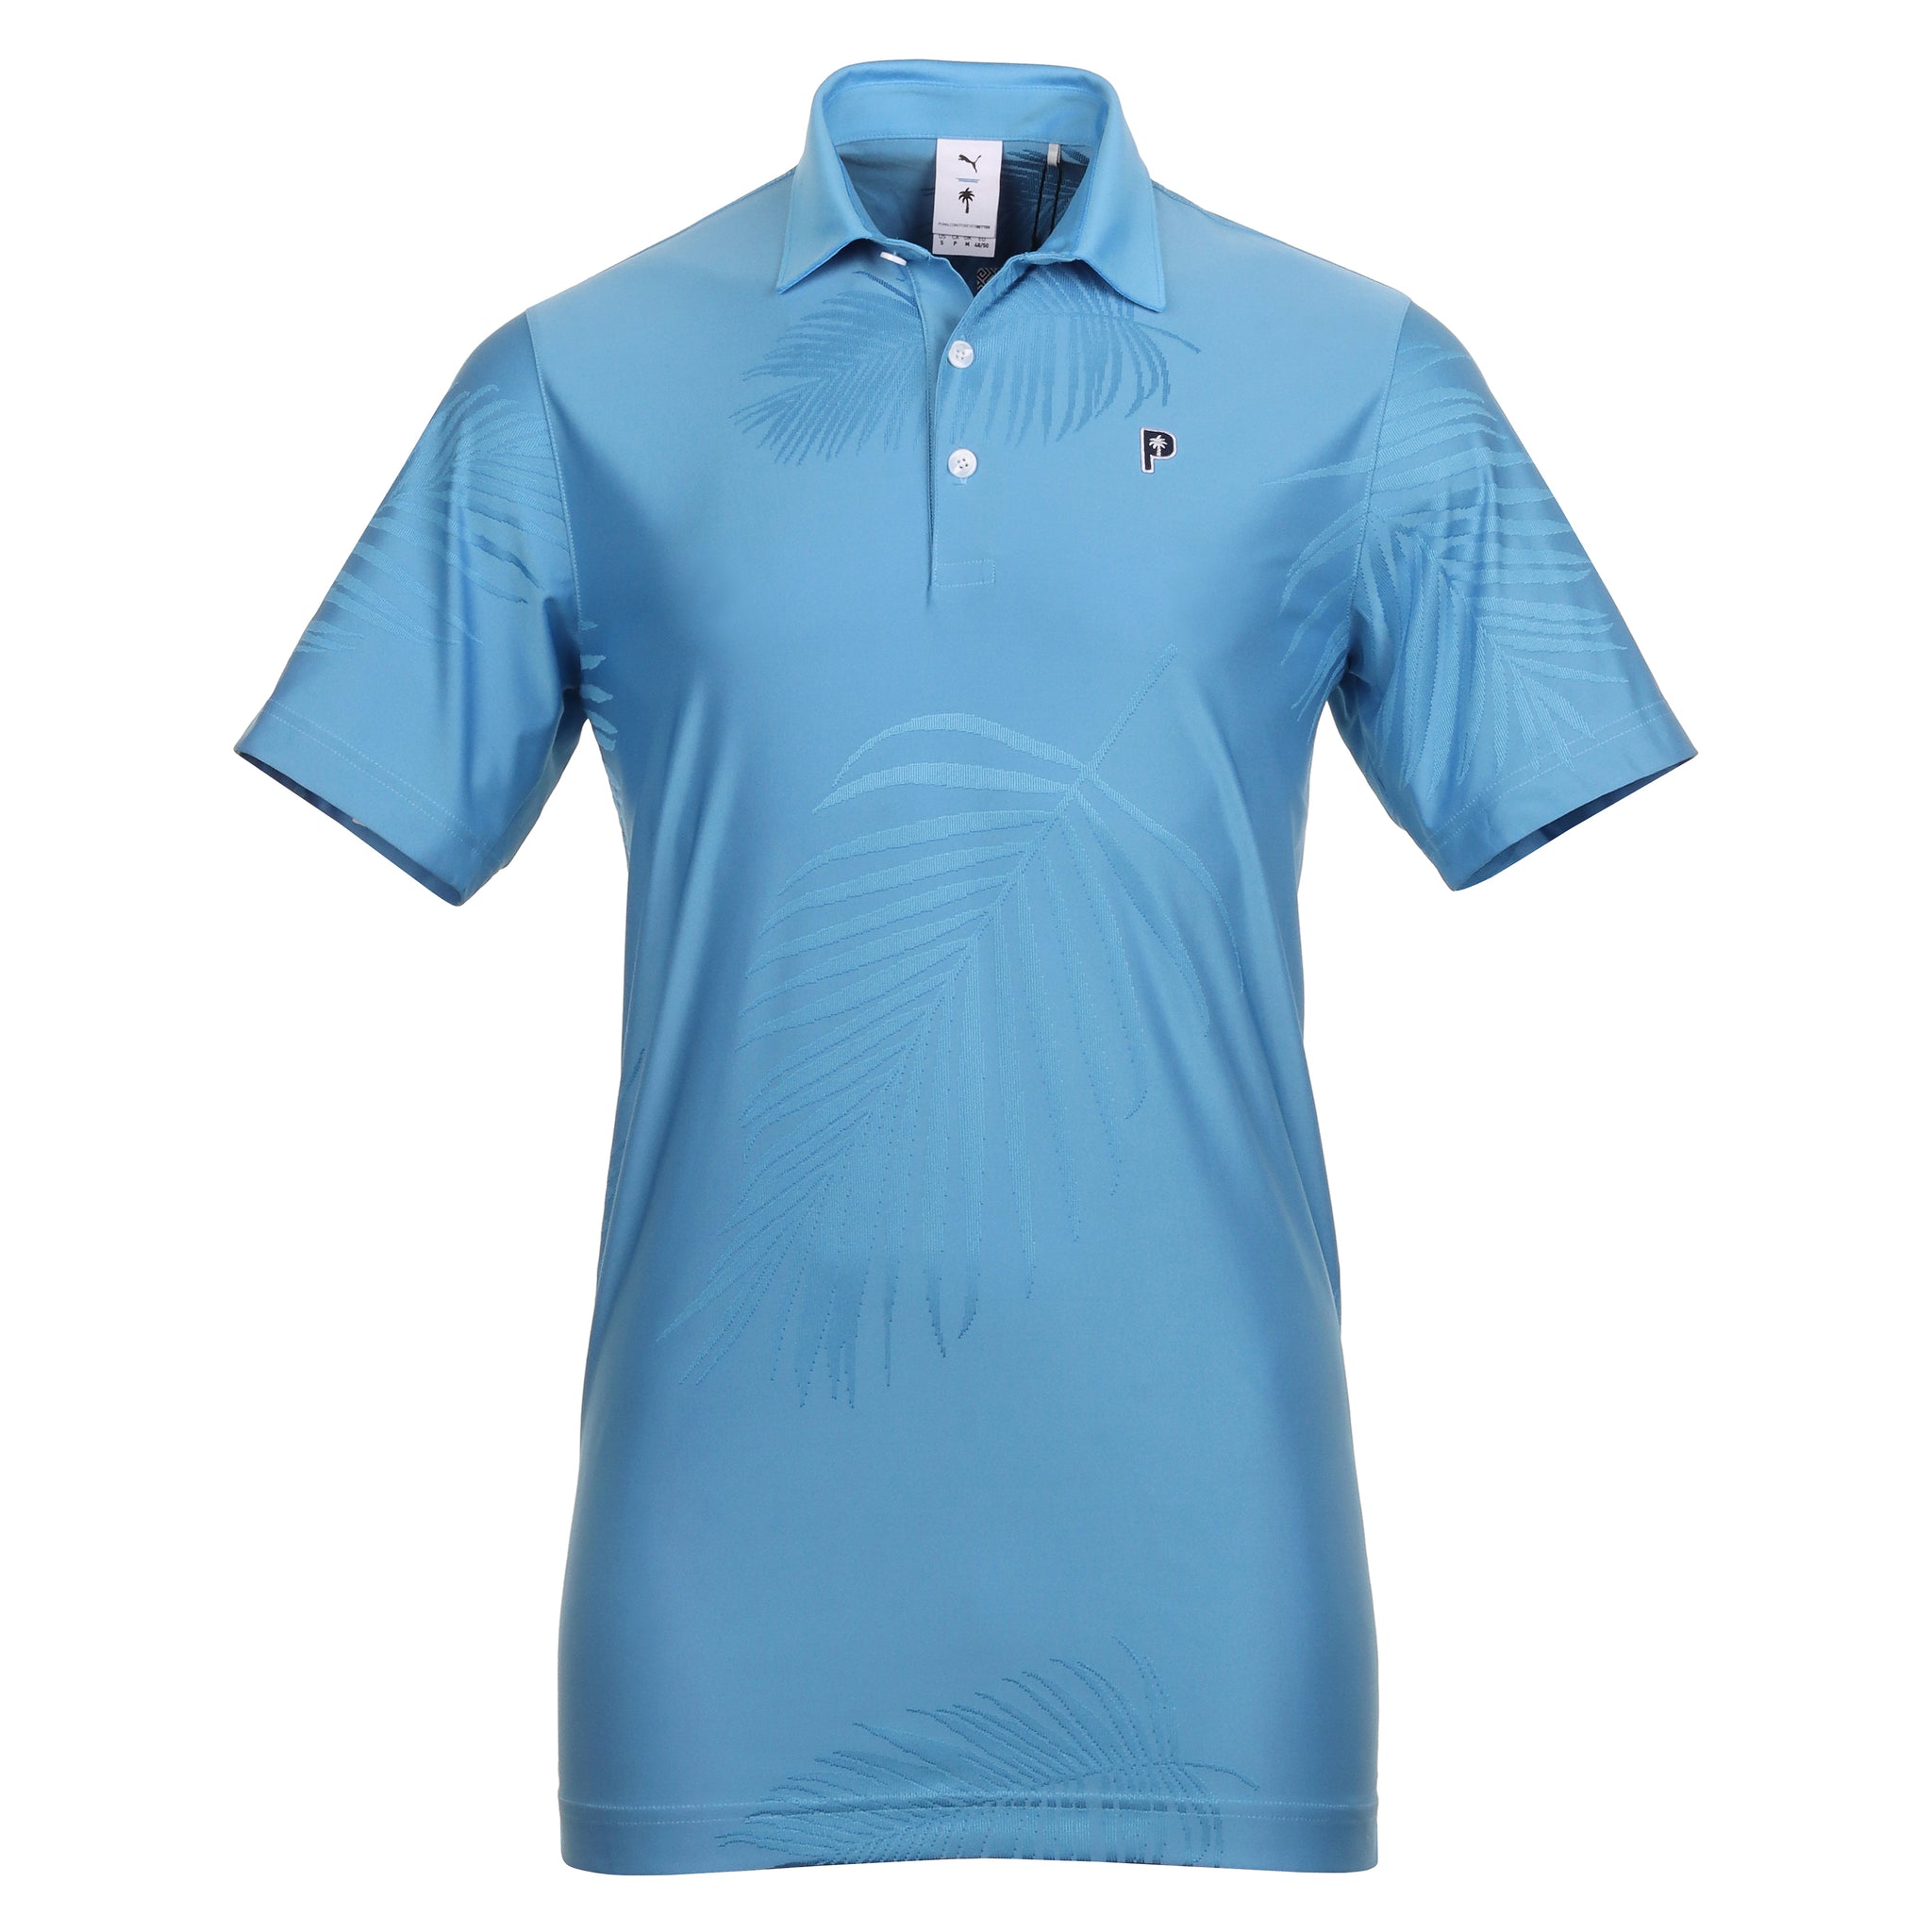 puma-golf-x-ptc-jacquard-shirt-623964-regal-blue-02